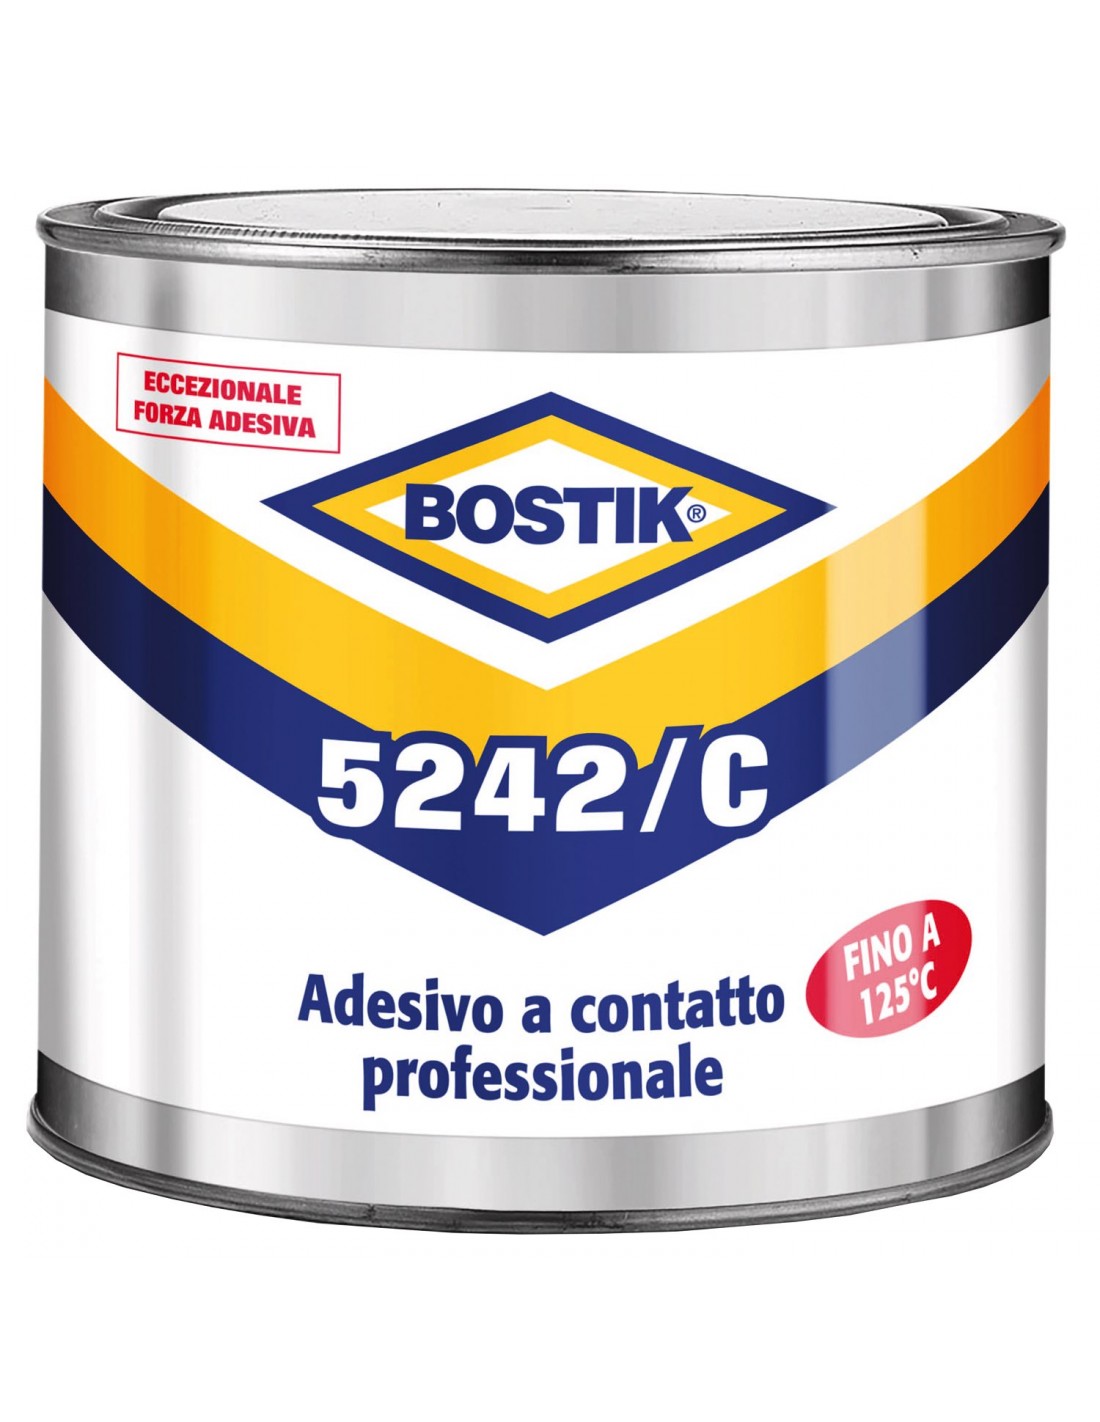 Bostik 5242/C